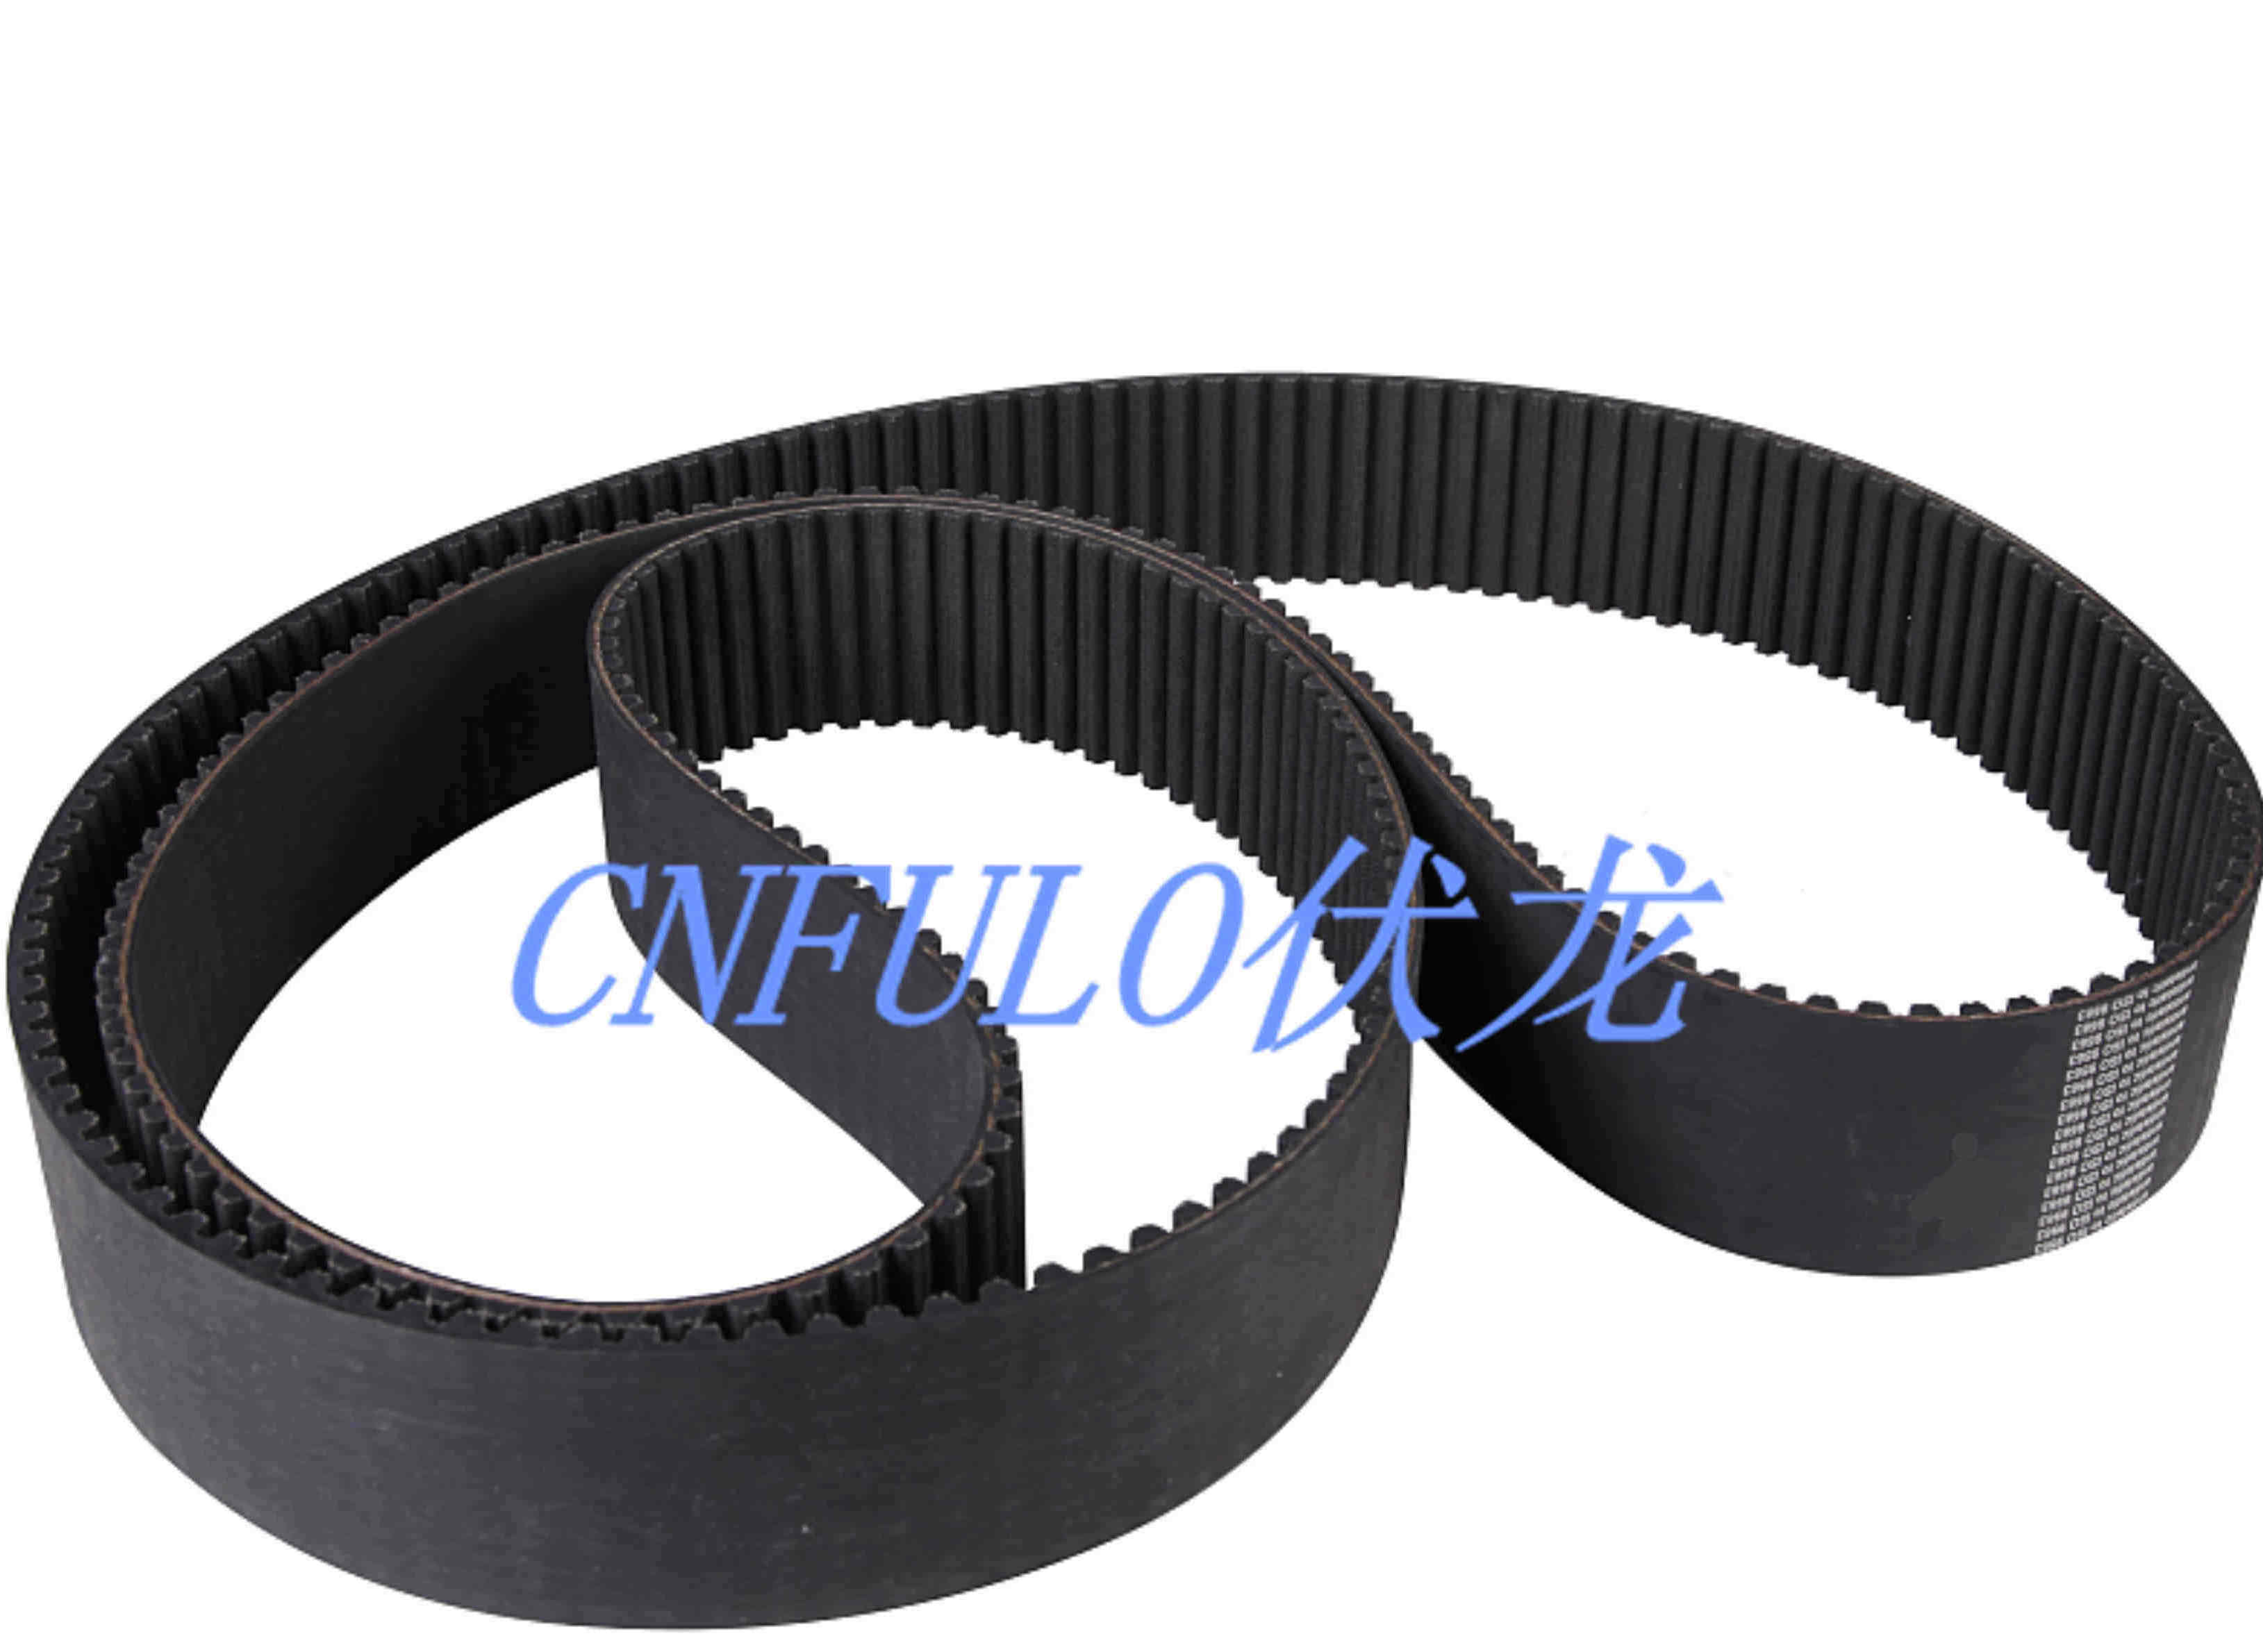 Industrial Rubber Neoprene Timing Belt, Power Transmission/Texitle/Printer Belt, 1050h